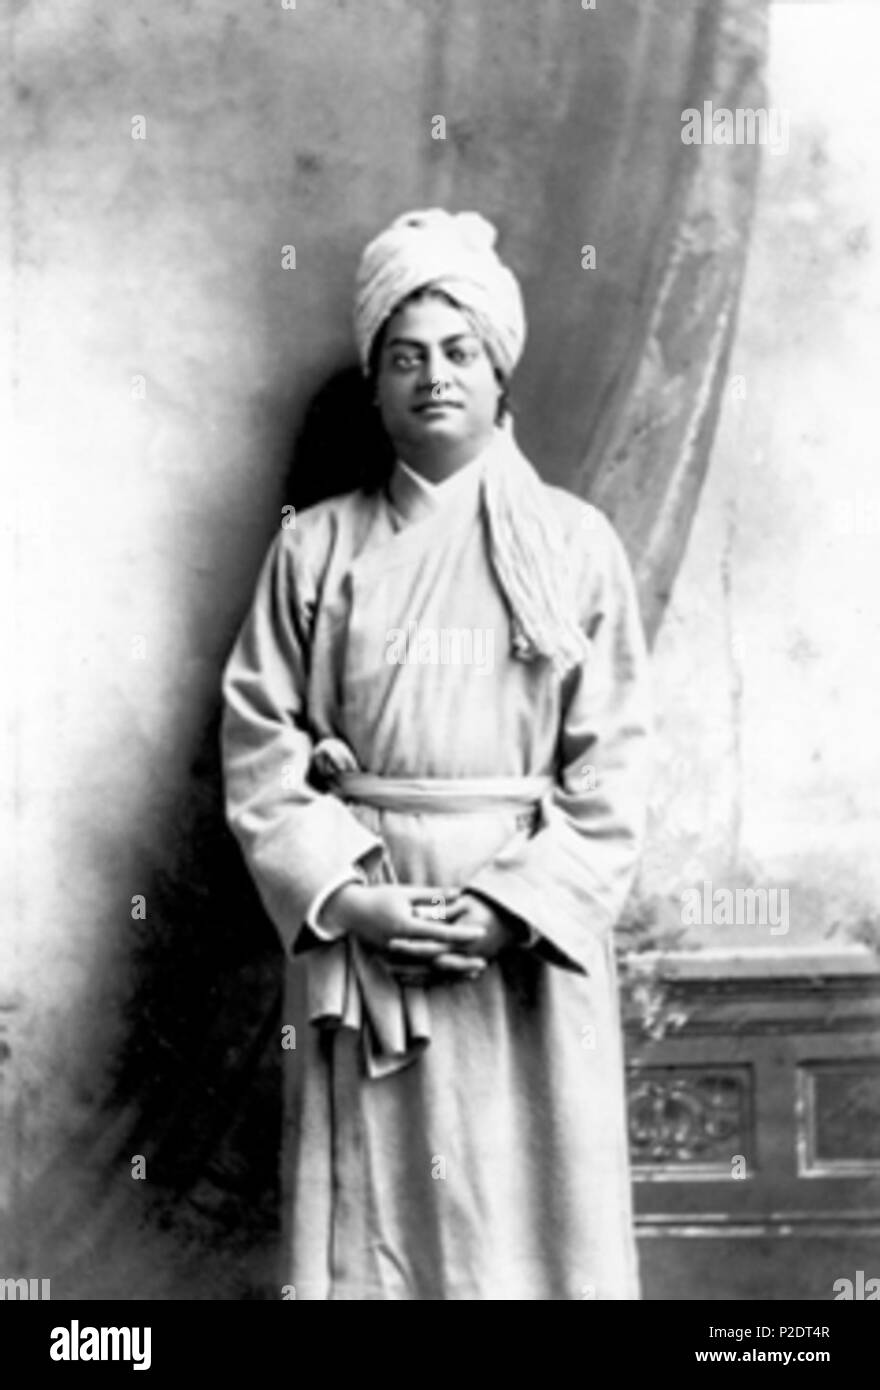 Swami vivekananda Black and White Stock Photos & Images - Alamy